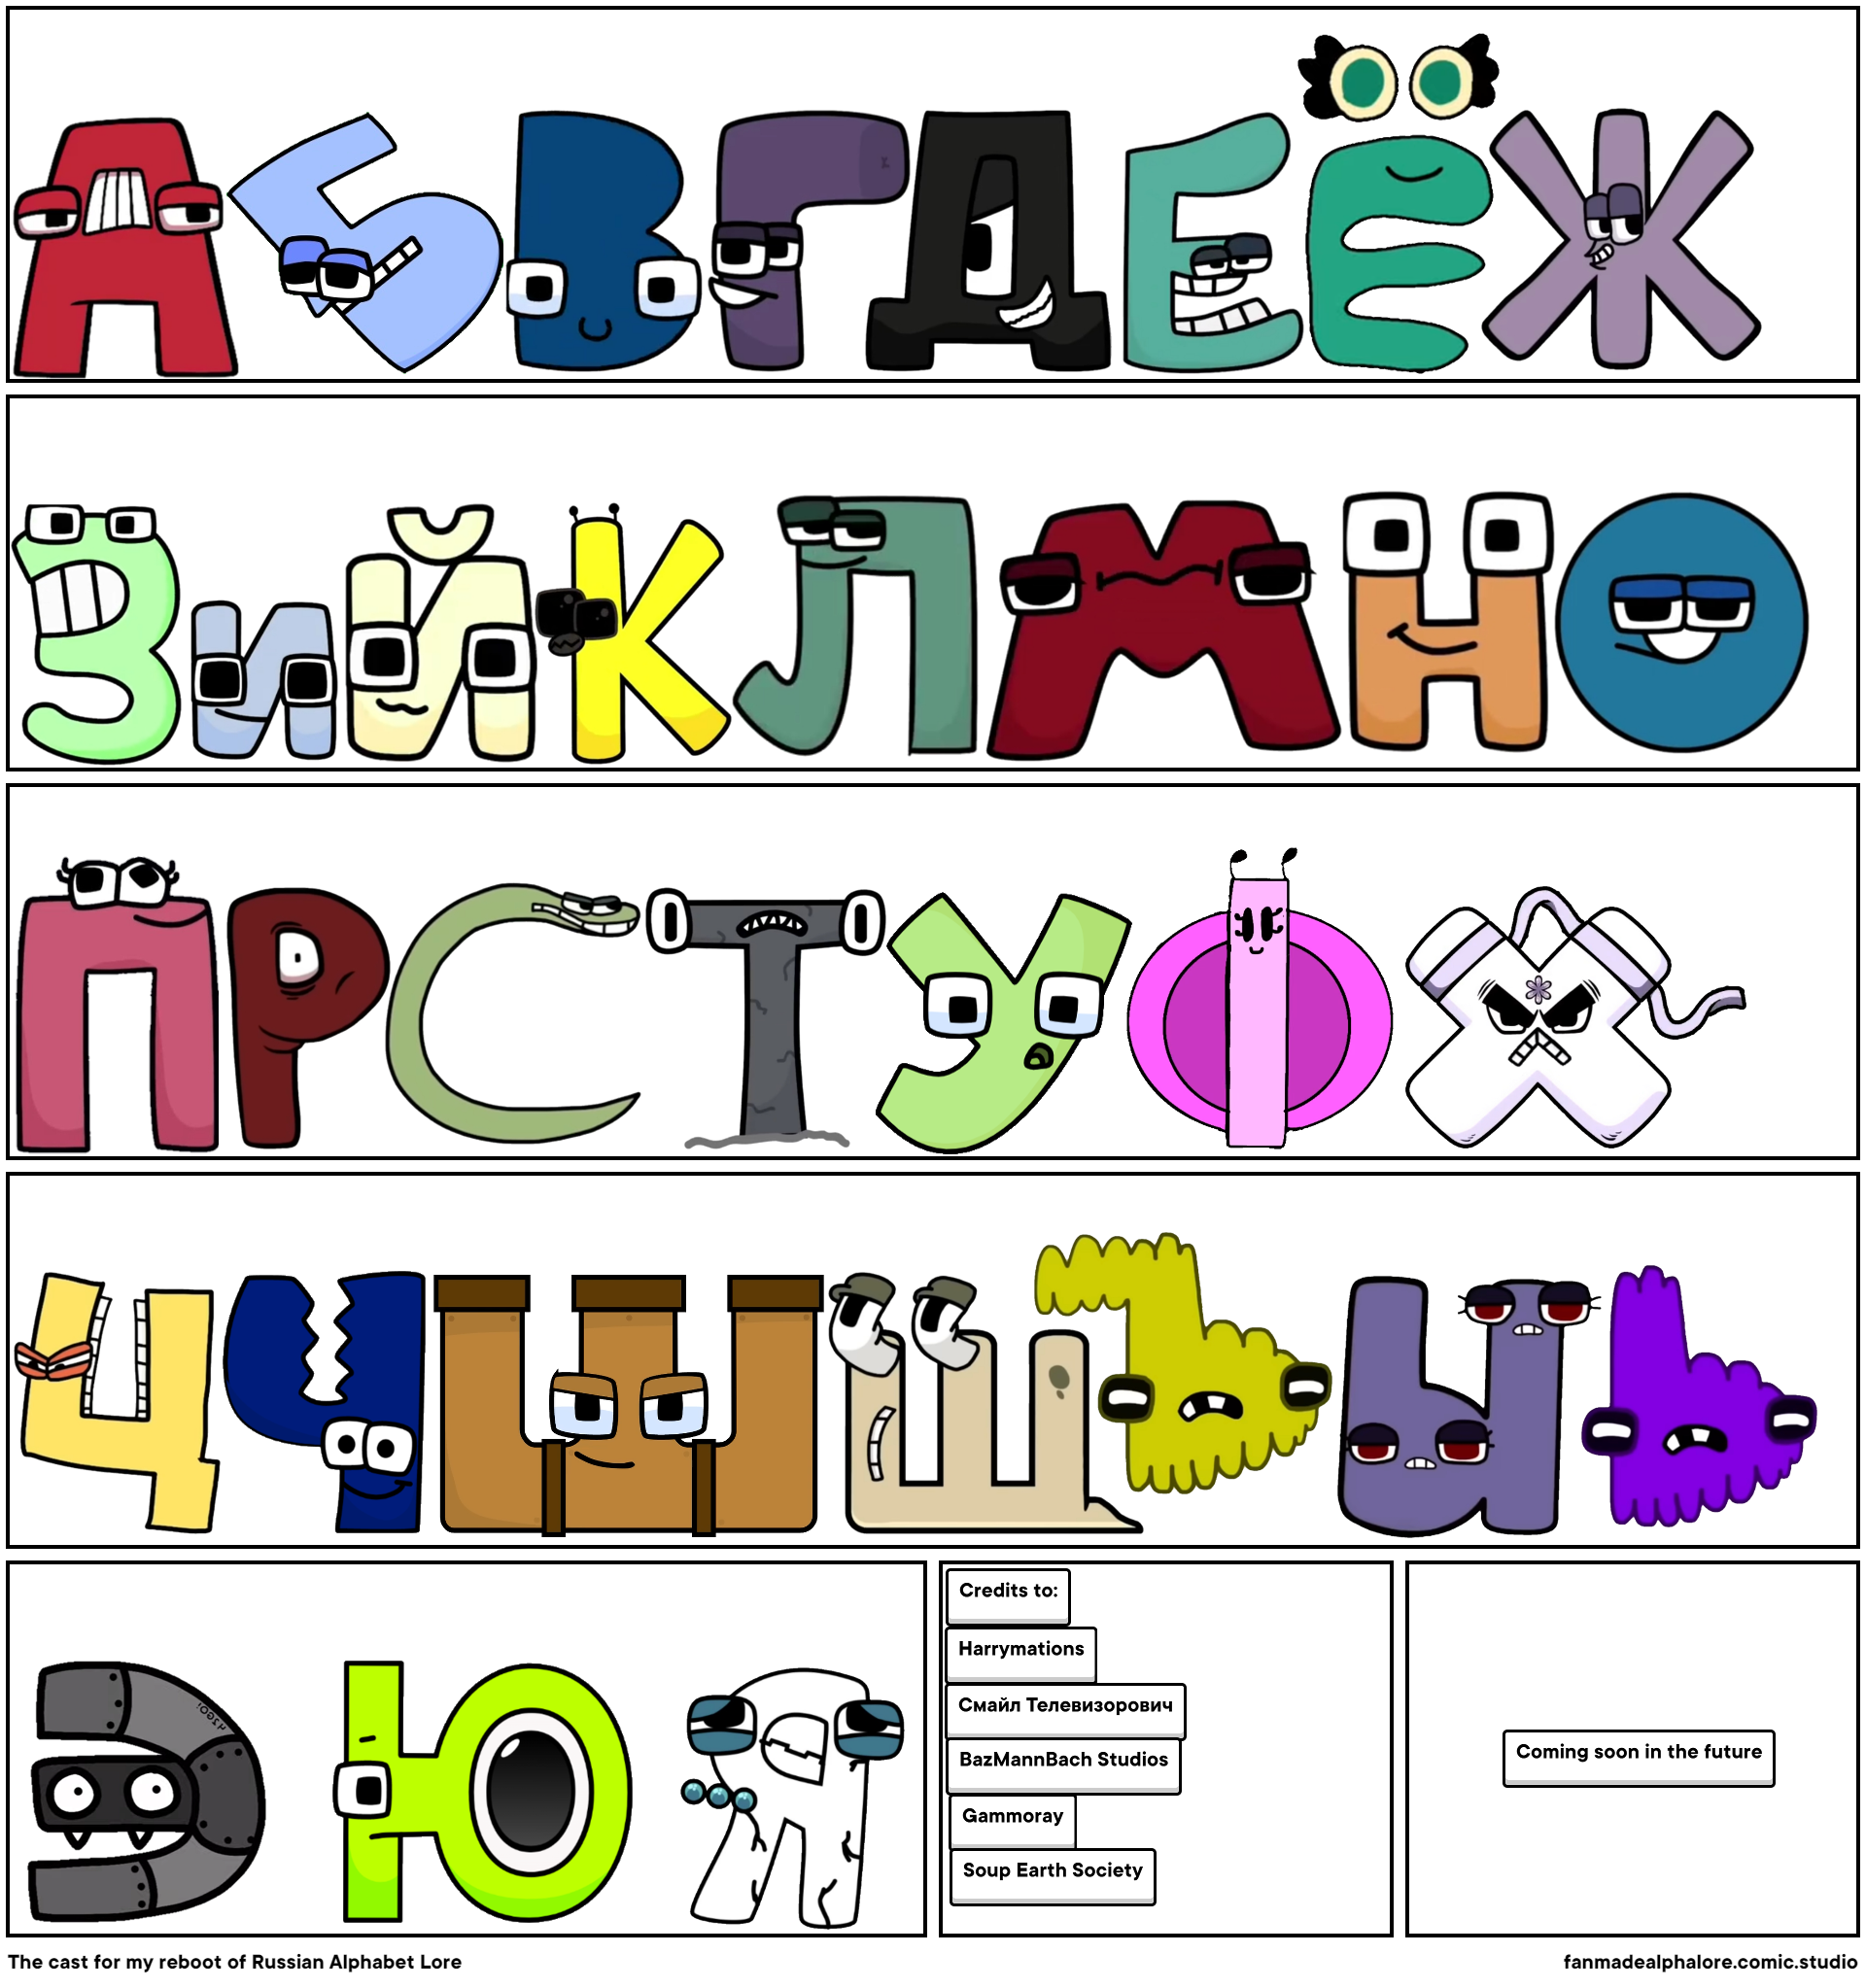 Russian Alphabet Lore Comic Studio